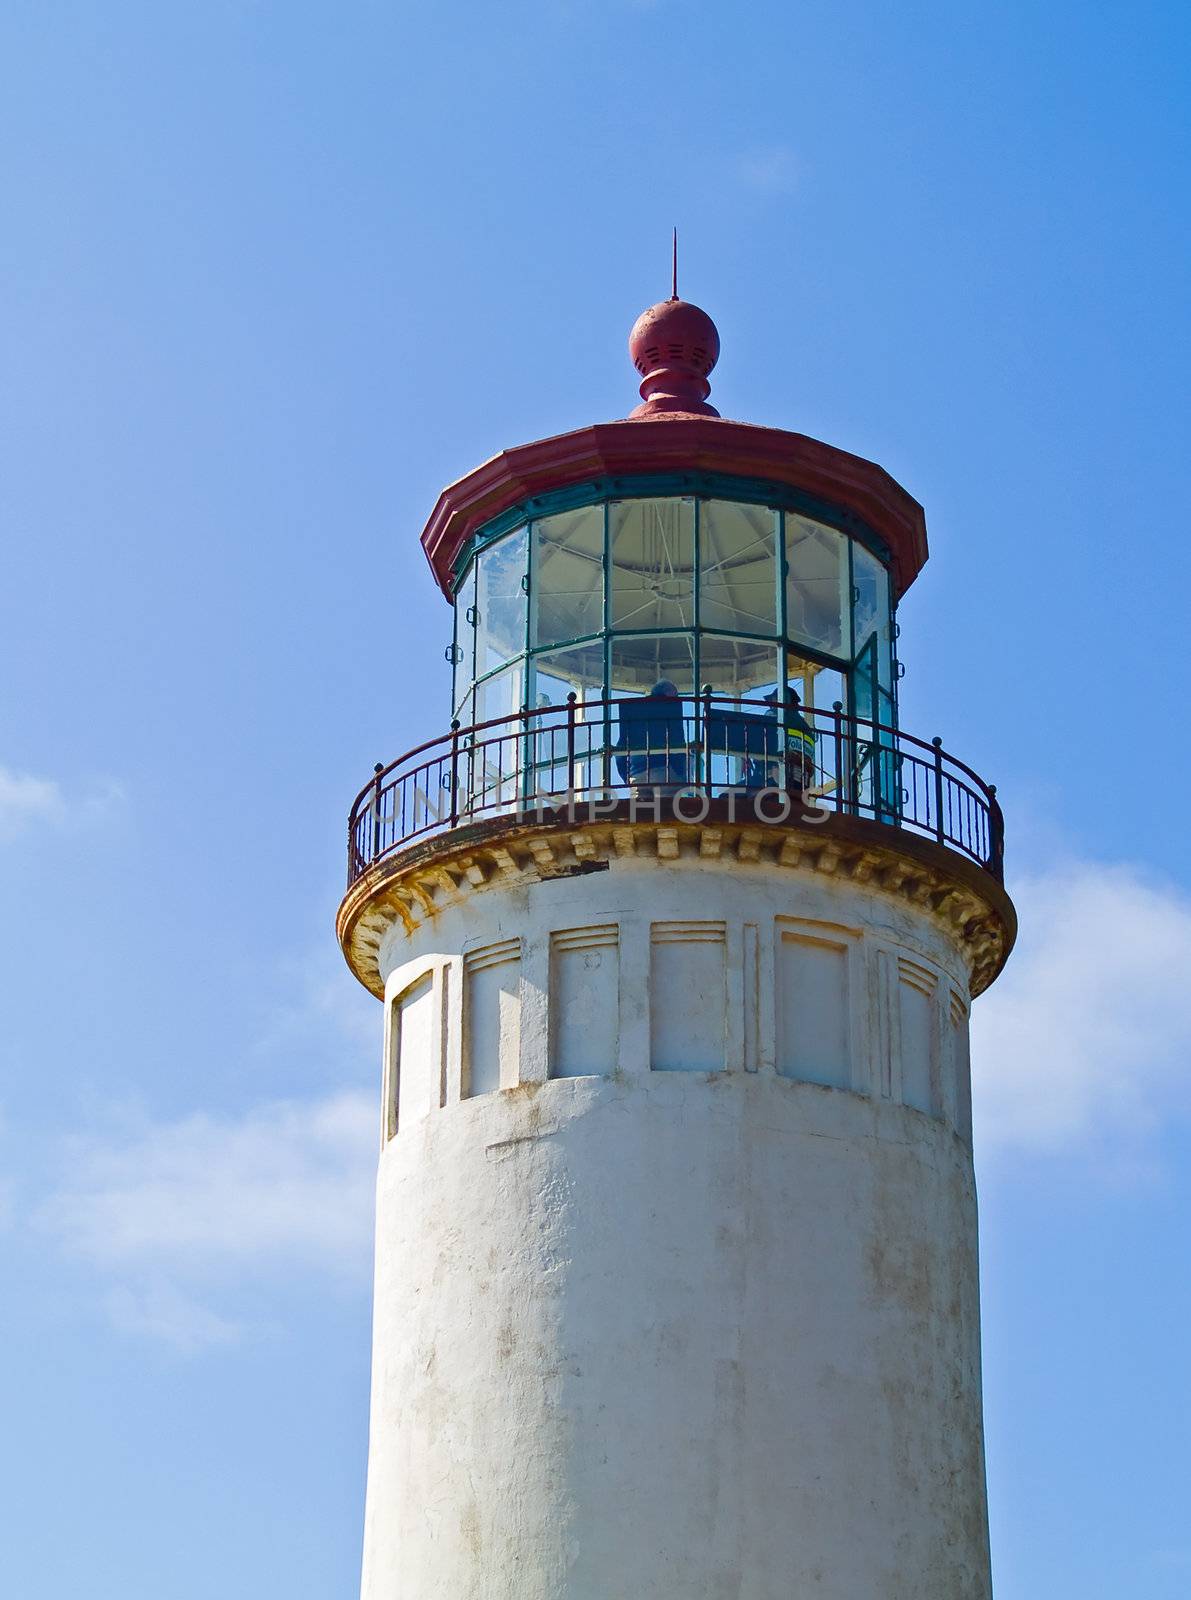 North Head Lighthouse on the Oregon Coast on a Clear, Sunny Day